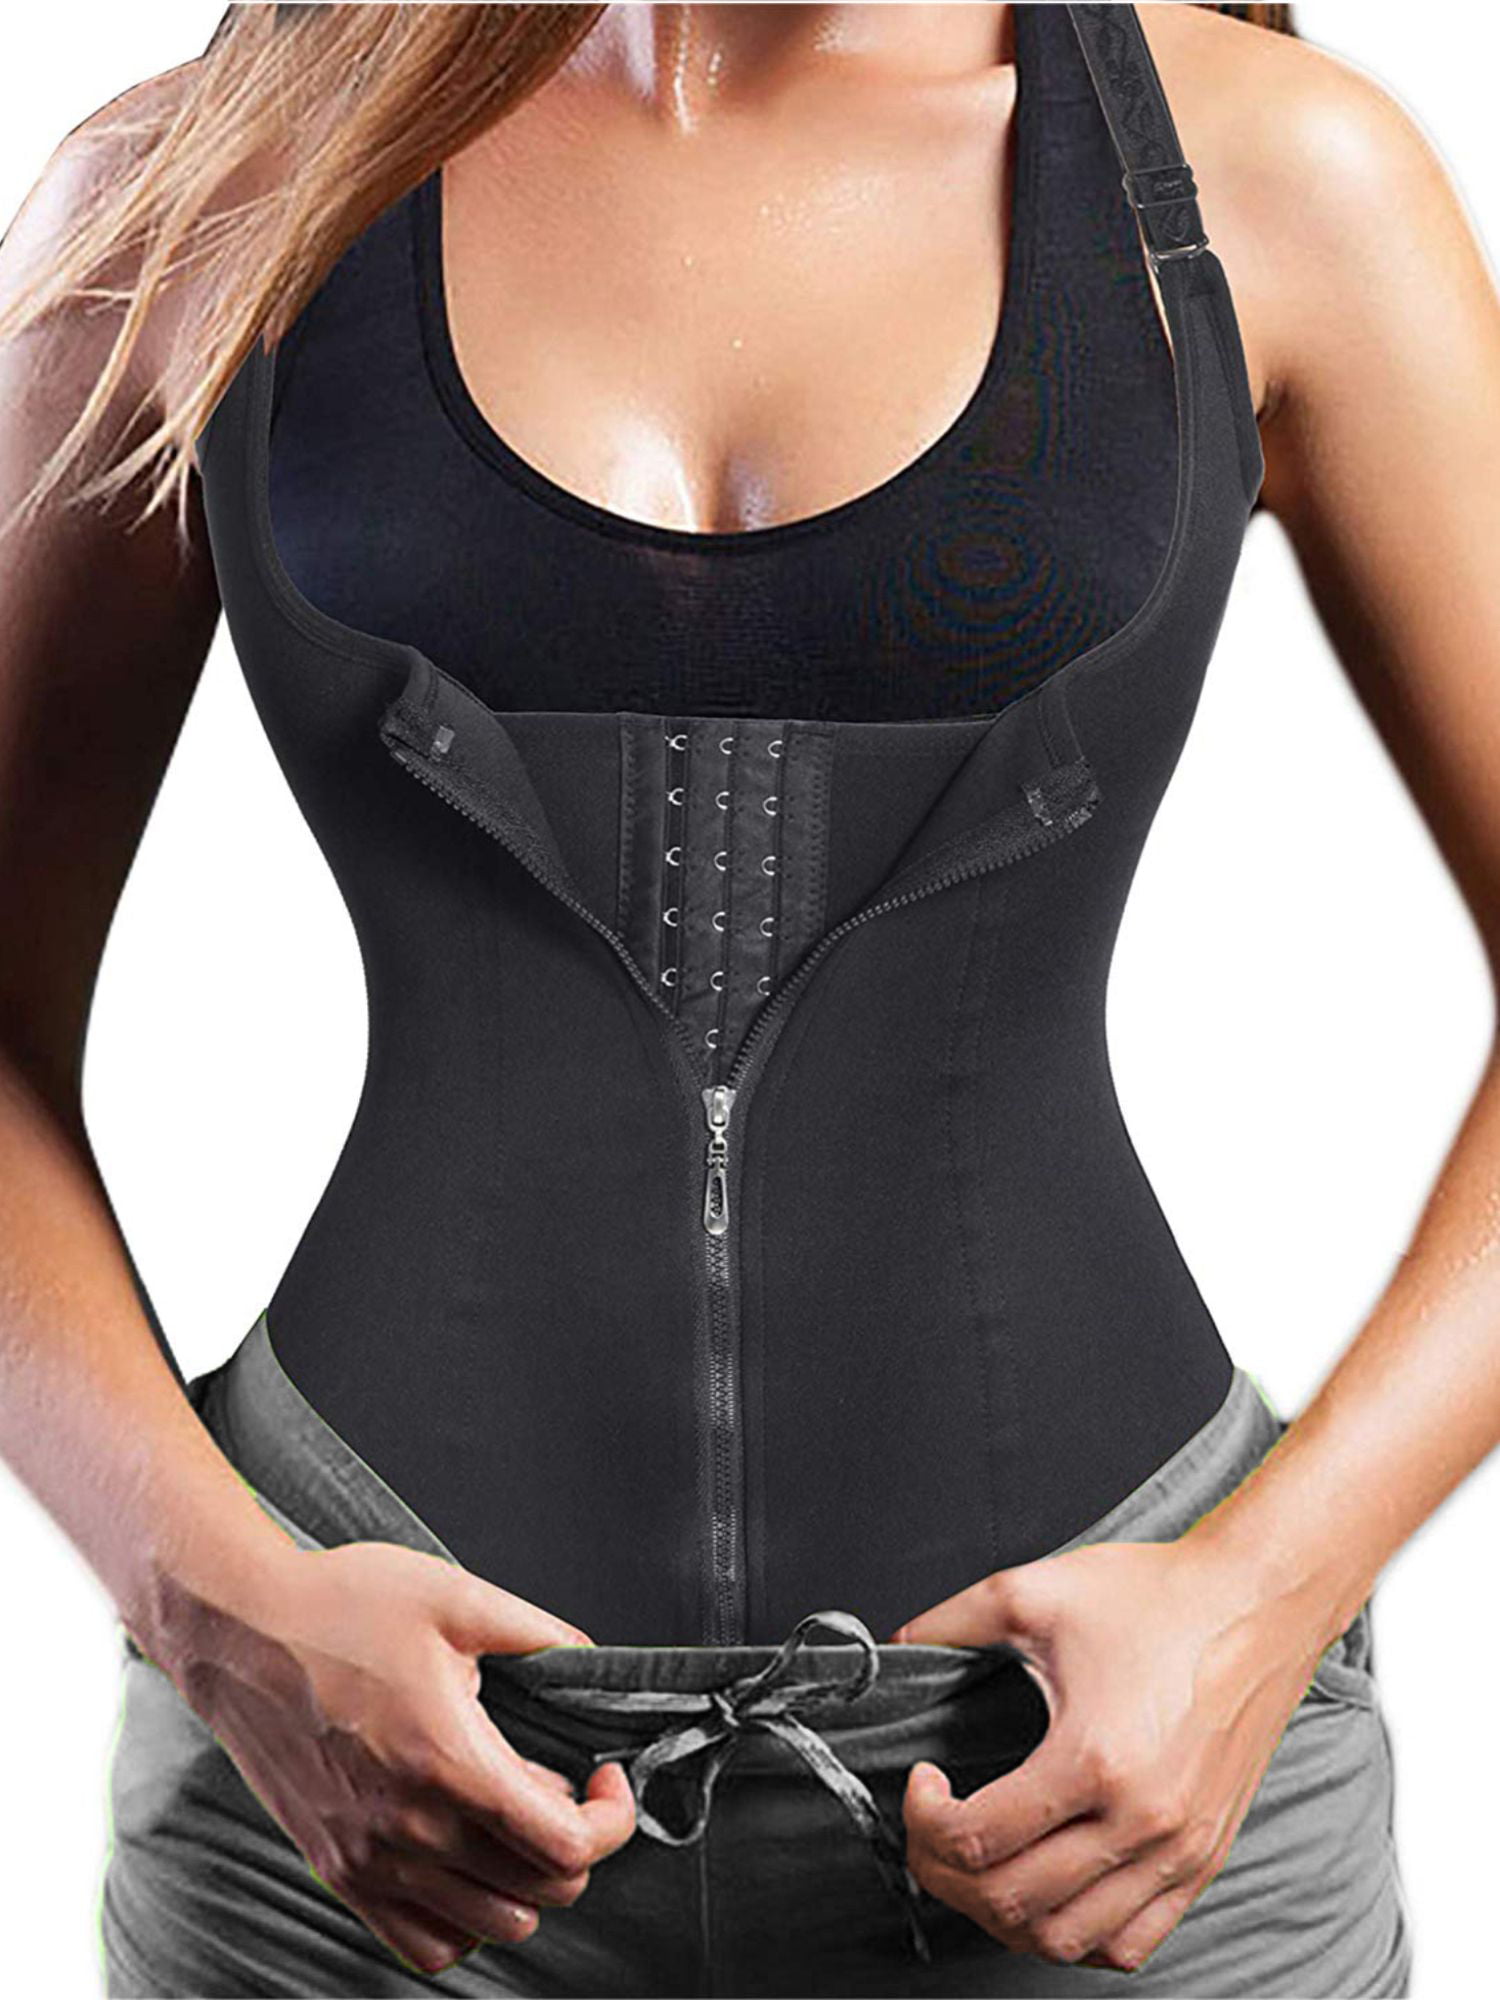 SIMIYA Womens Waist Trainer Corset Zipper Vest Slimming Body Shaper Cincher Tummy Control Sports Girdle Band with Adjustable Straps